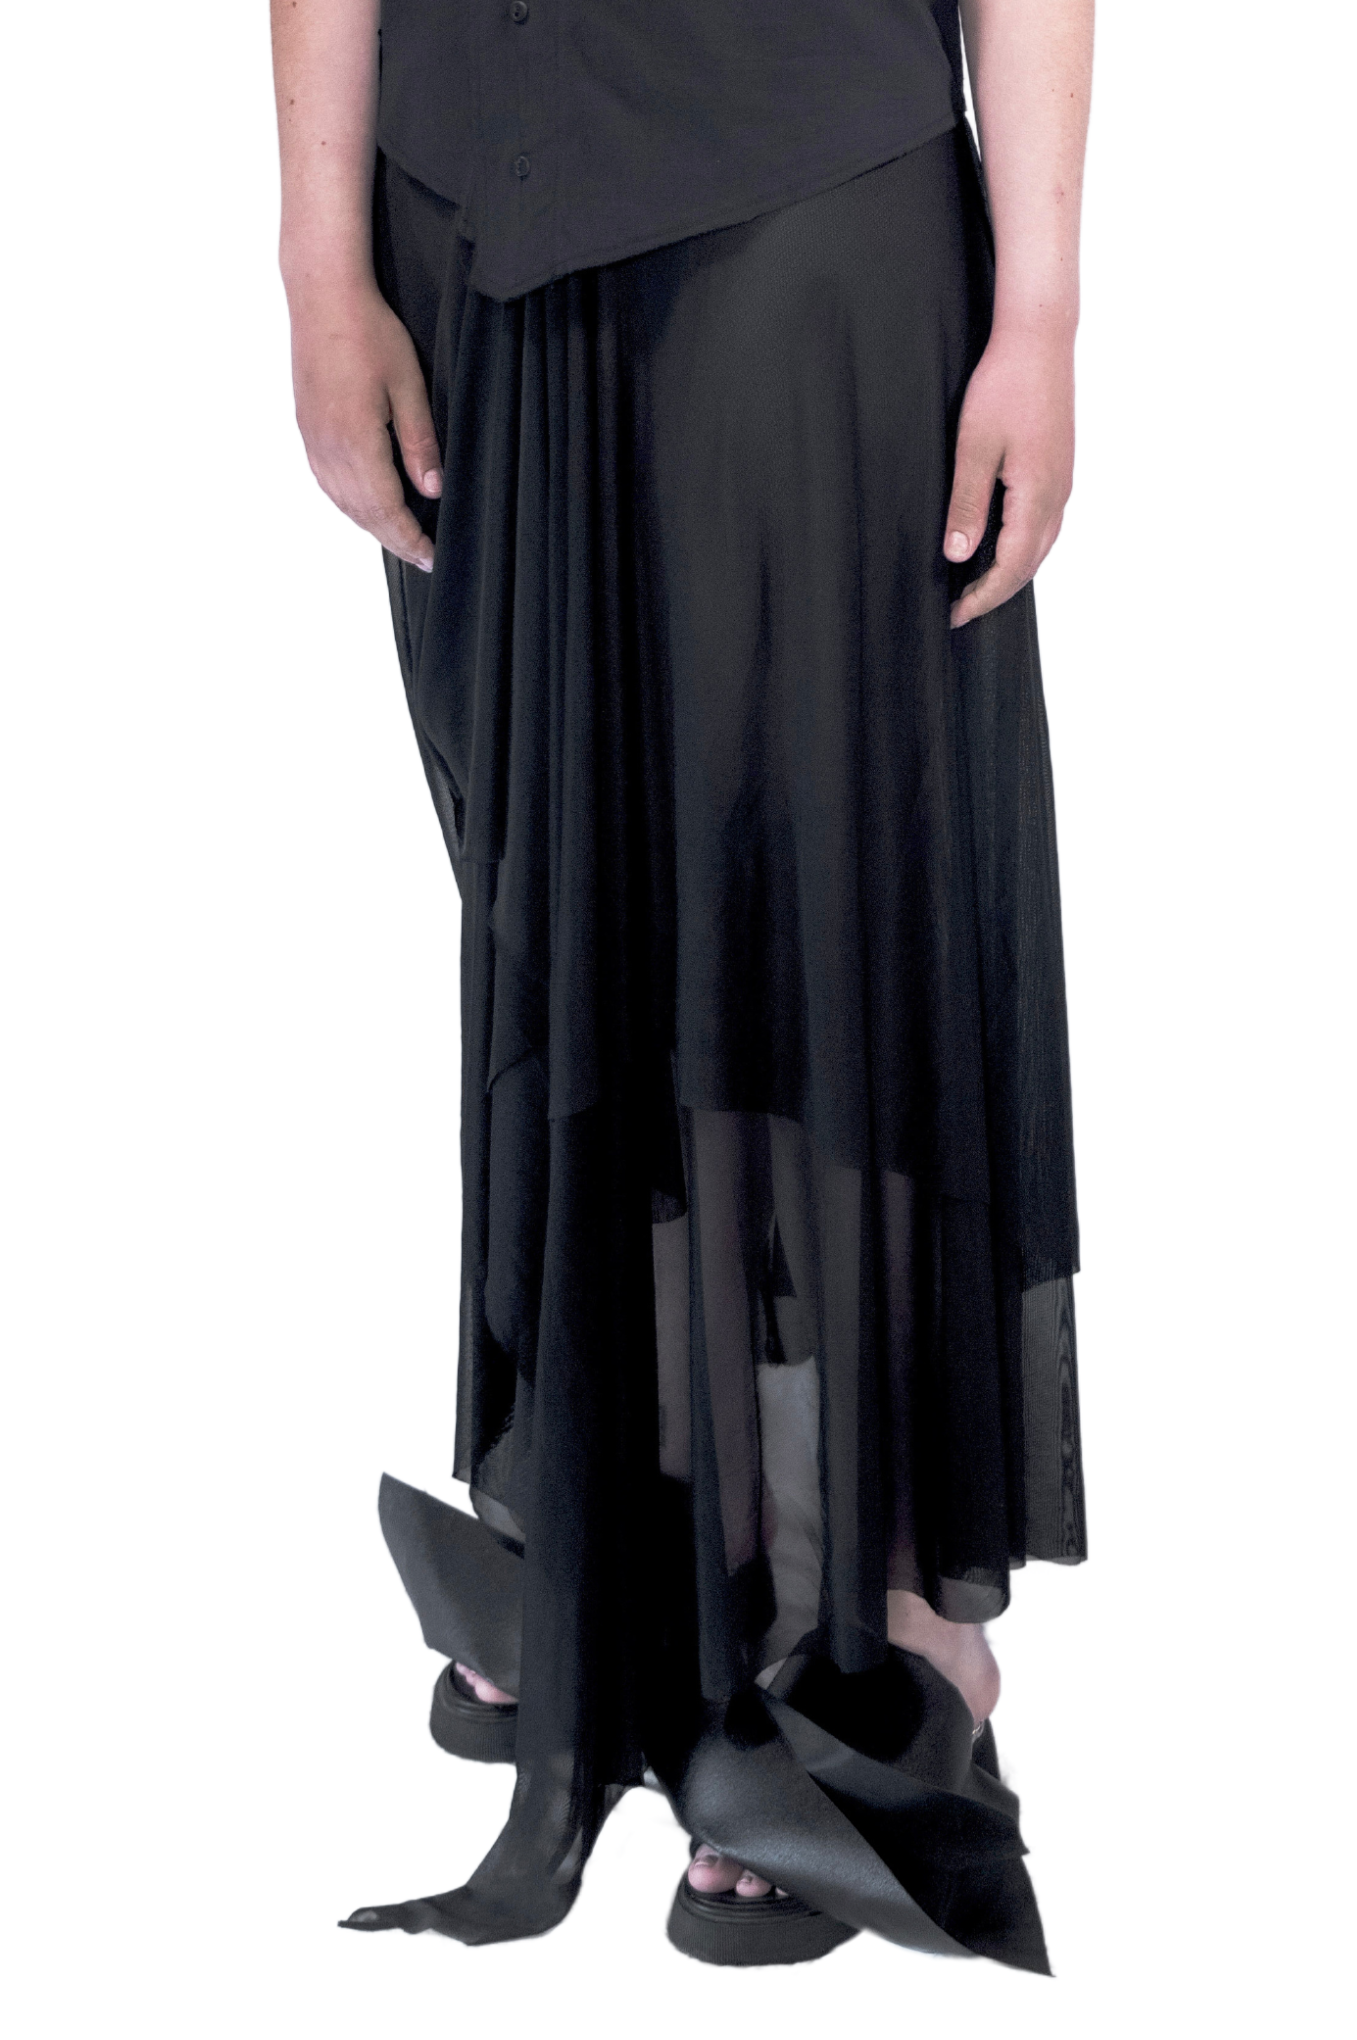 VENUS Transformable Skirt-Dress in Black Mesh